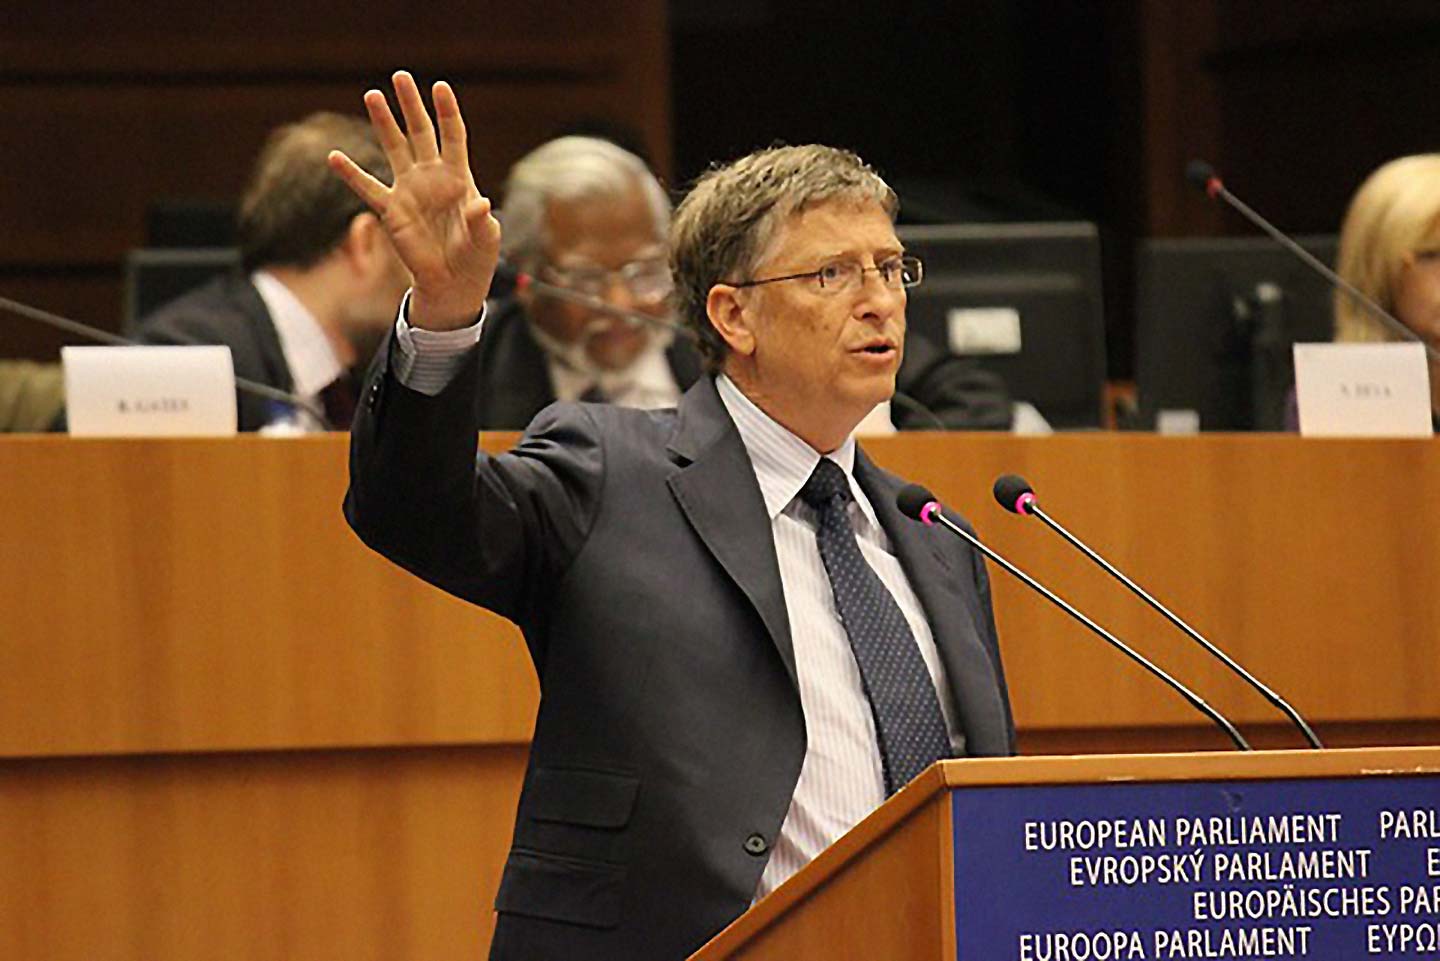 Bill Gates addresses the European Parliament Development Committee. Photo credit: One.org/2012